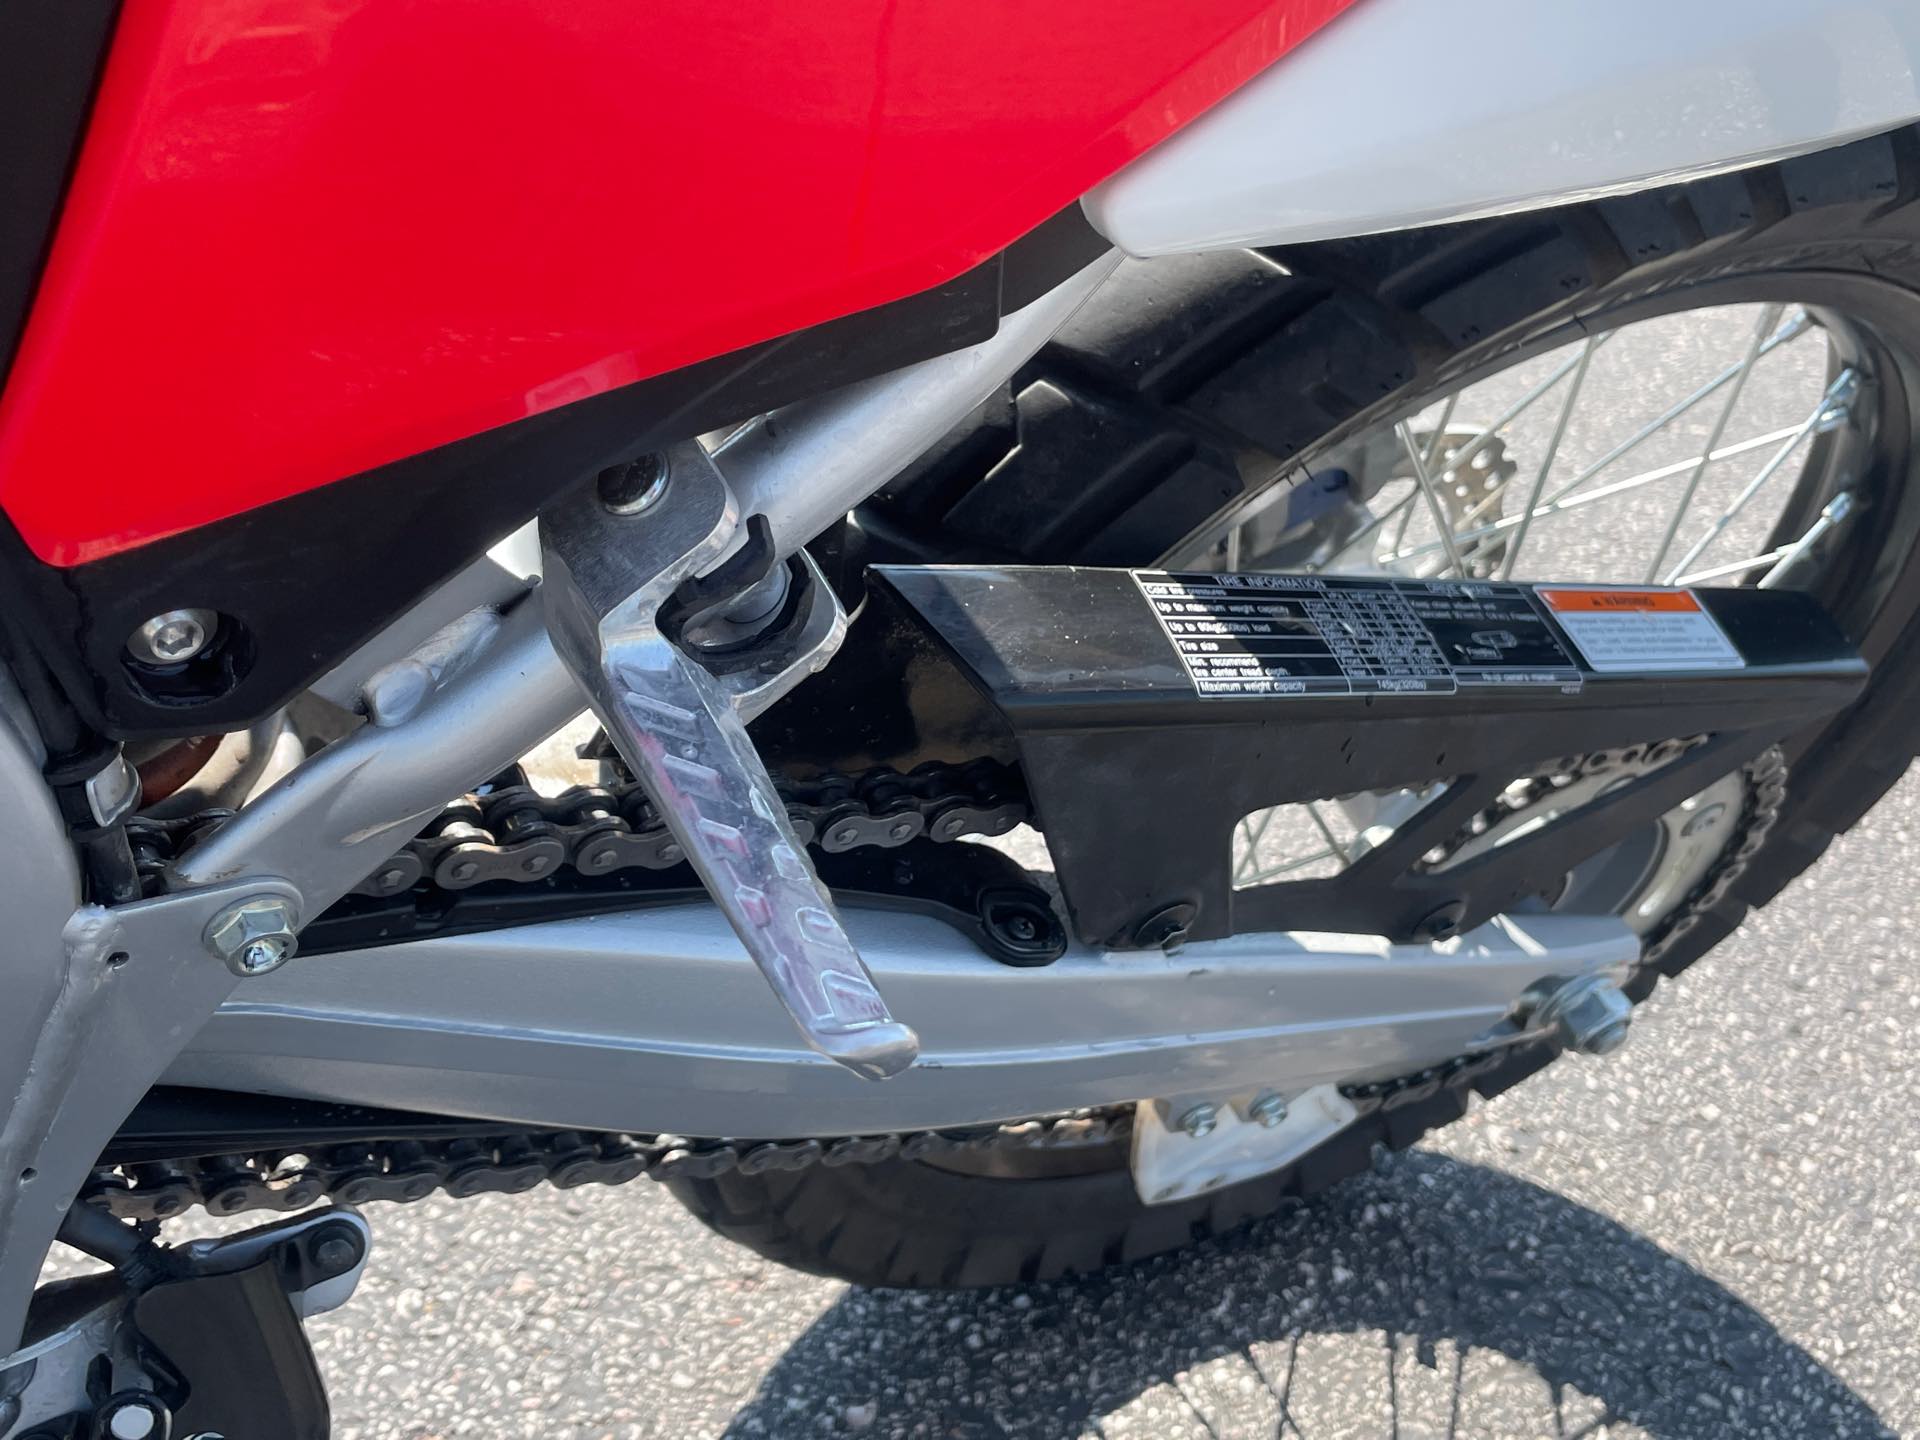 2019 Honda CRF 250L at Mount Rushmore Motorsports